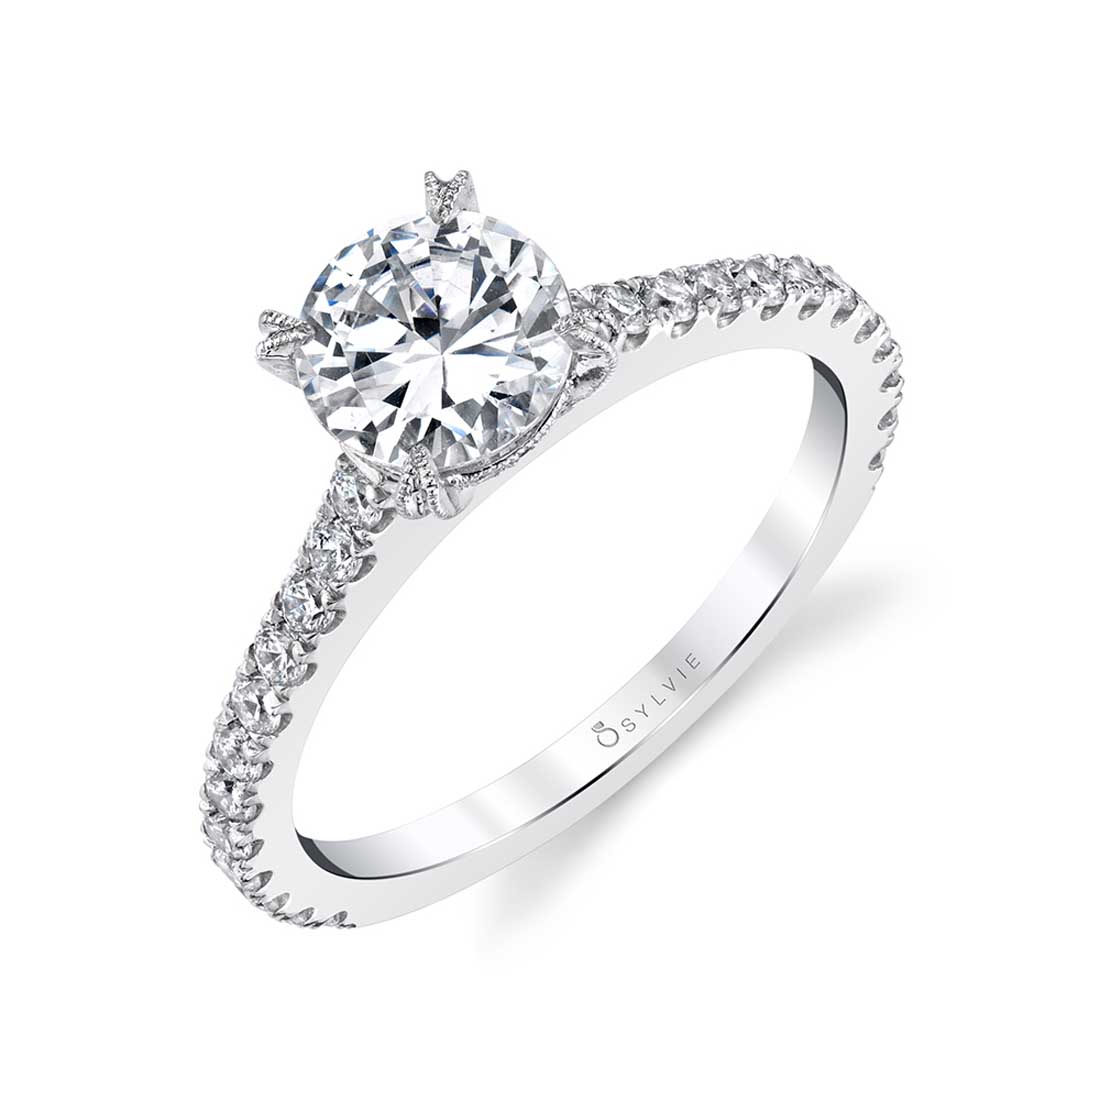 Sylvie 18K White Gold Diamond Engagement Ring with Diamond Encrusted Head